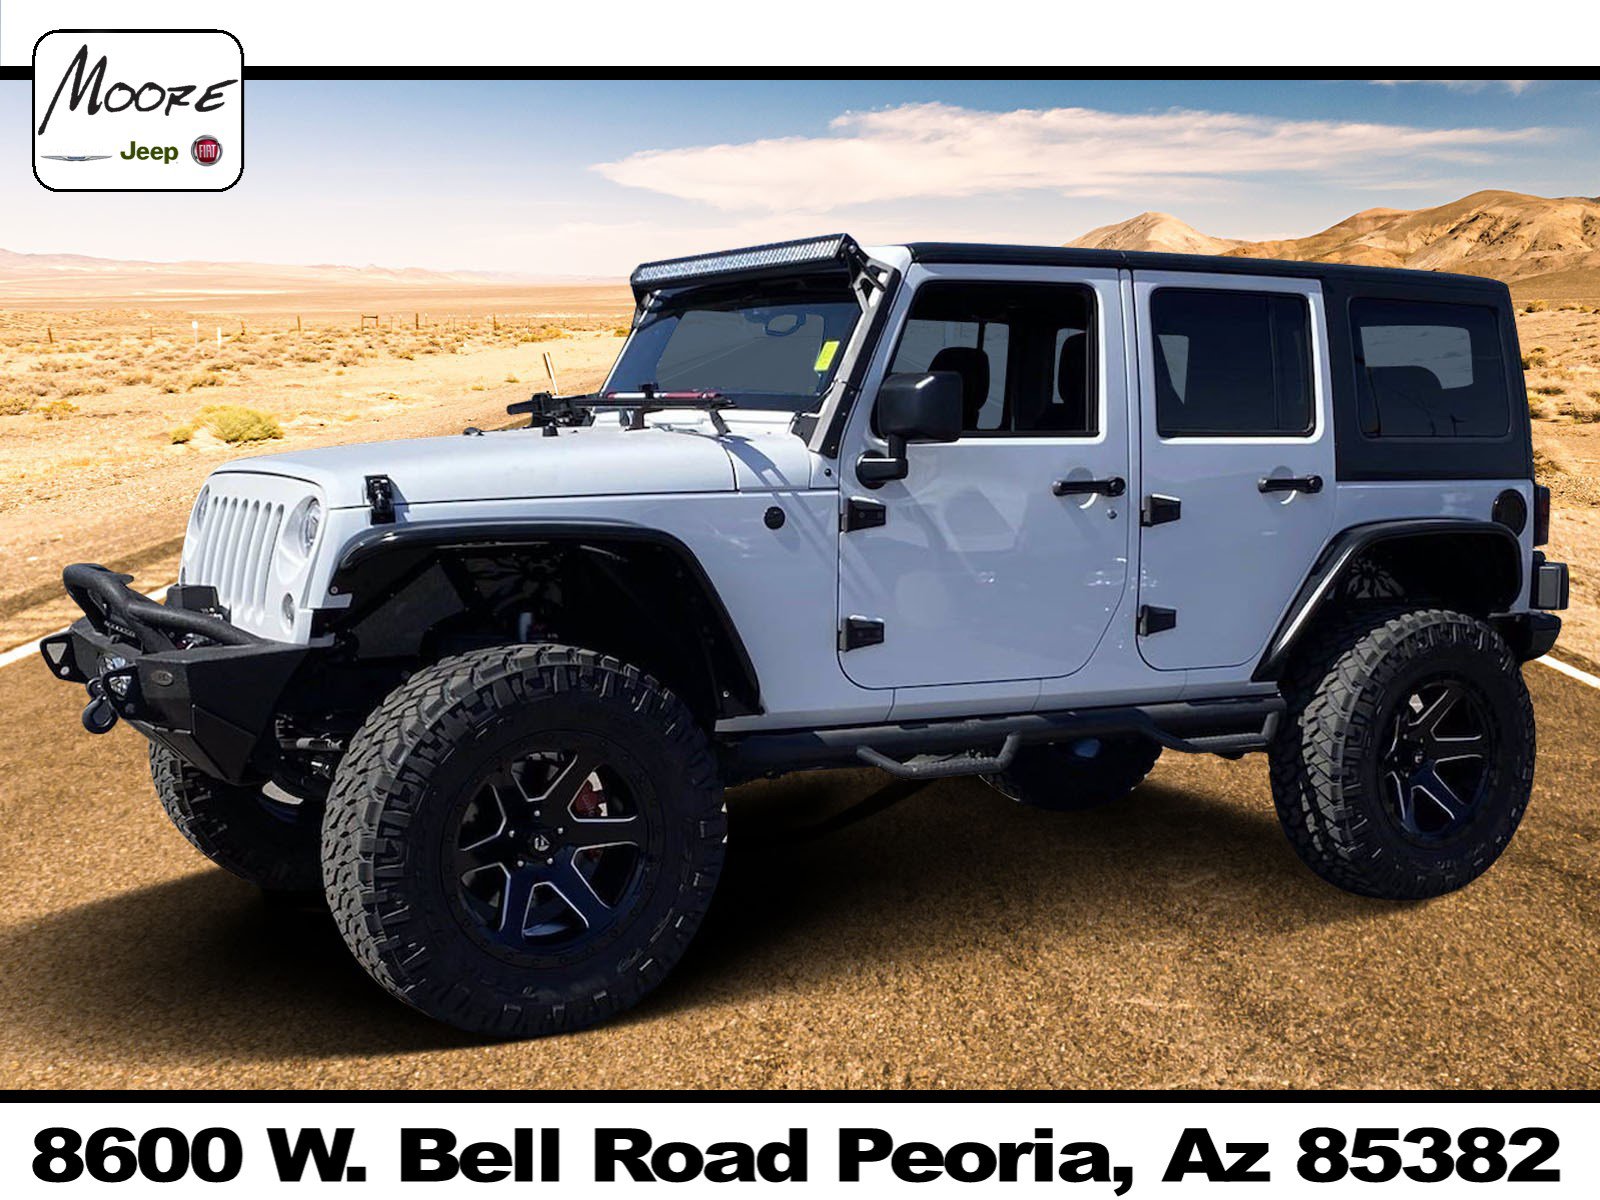 Used 2017 Jeep Wrangler JK Unlimited SUV for sale in Peoria, AZ | Near  Phoenix, Sun City, Glendale, Avondale & Surprise, AZ | VIN:1C4BJWDG6HL529415